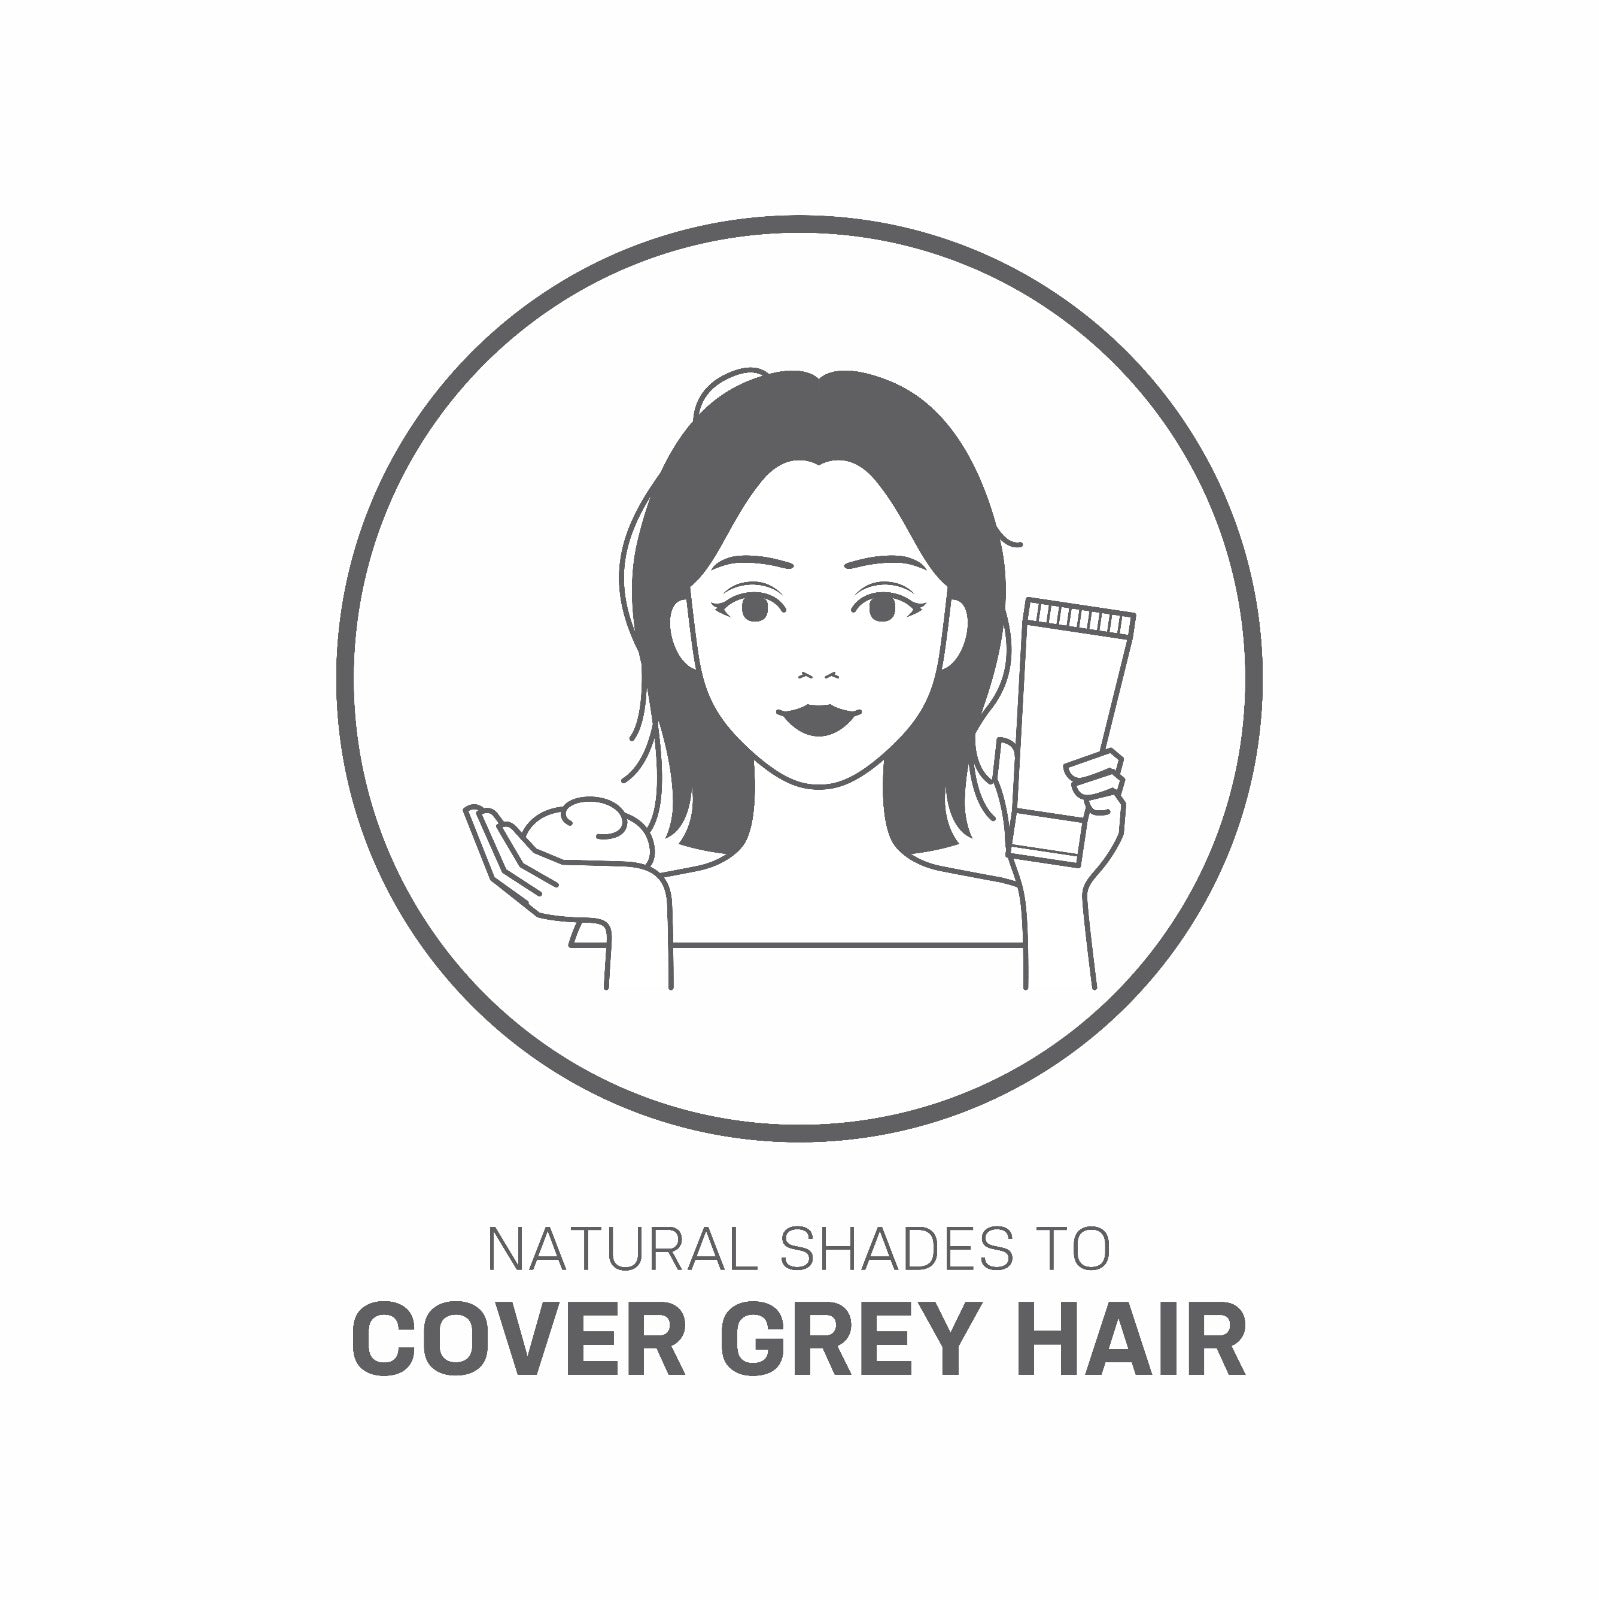 Cover grey hair with natural shades